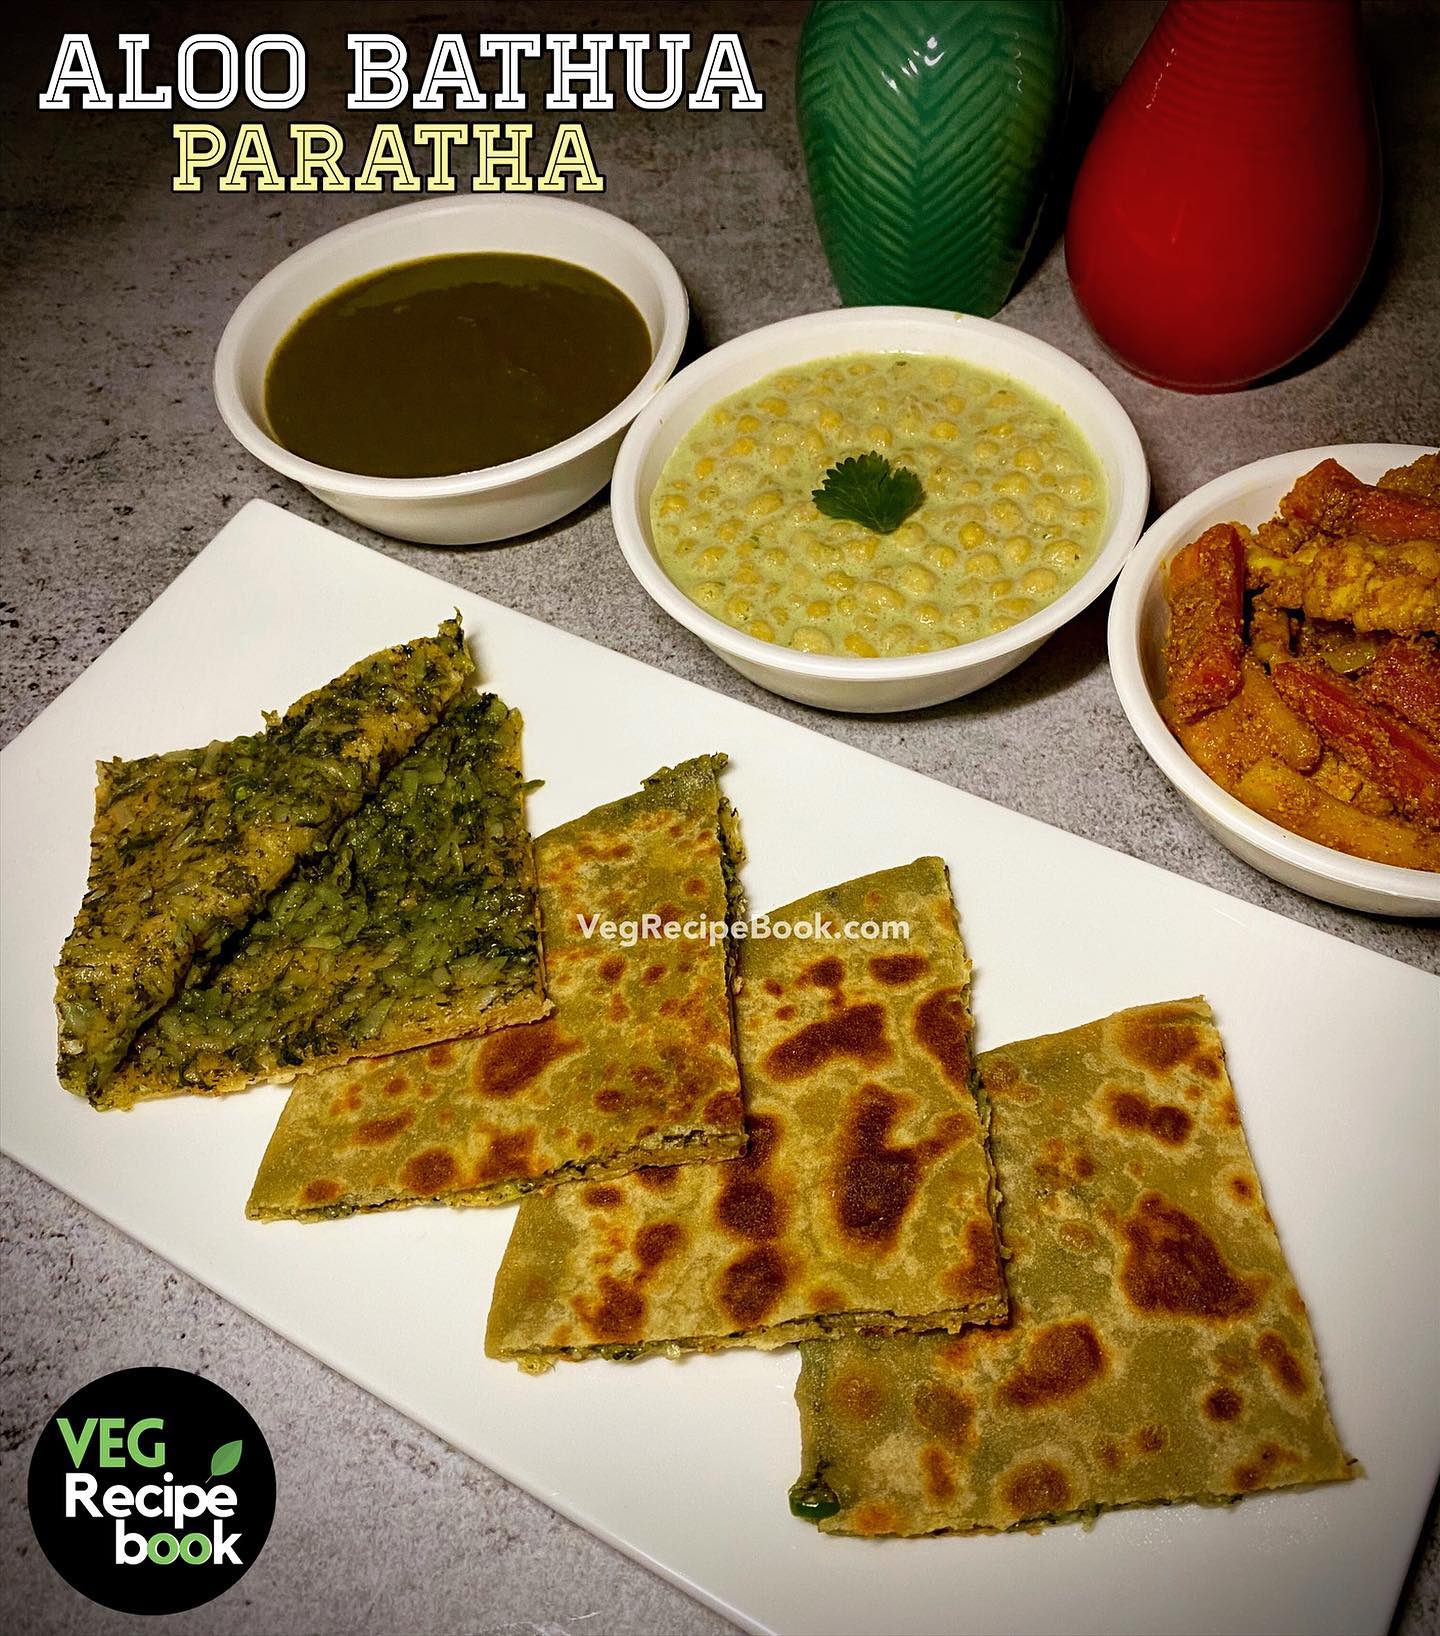 Aloo Bathua stuffed Paratha Recipe
✅ Clickable Recipe Link in Bio @thevegrecipebook ✨

Recipe:  https://youtu.be/ZmoQLt4R9qY 
.
.
.
Follow me @thevegrecipebook for more delicious recipes.
.
.
.
#aloobathuaparantha #bathuaalooparantha #bathuastuffedparatha #stuffedbathuaparatha #bathua #bathuaparatha #stuffedparatha #paratha #parathas #paratharecipes #paratharecipe #indianflatbread #flatbread #flatbreadrecipe #vegrecipebook #itsmegrd #garuskitchen #videorecipe #winterspecial #recipesharing #recipesbook #recipecreation #recipebyflorab #recipebox #recipecreator #foodielove #foodielover #foodiefeature #foodiepic #foodiesunite